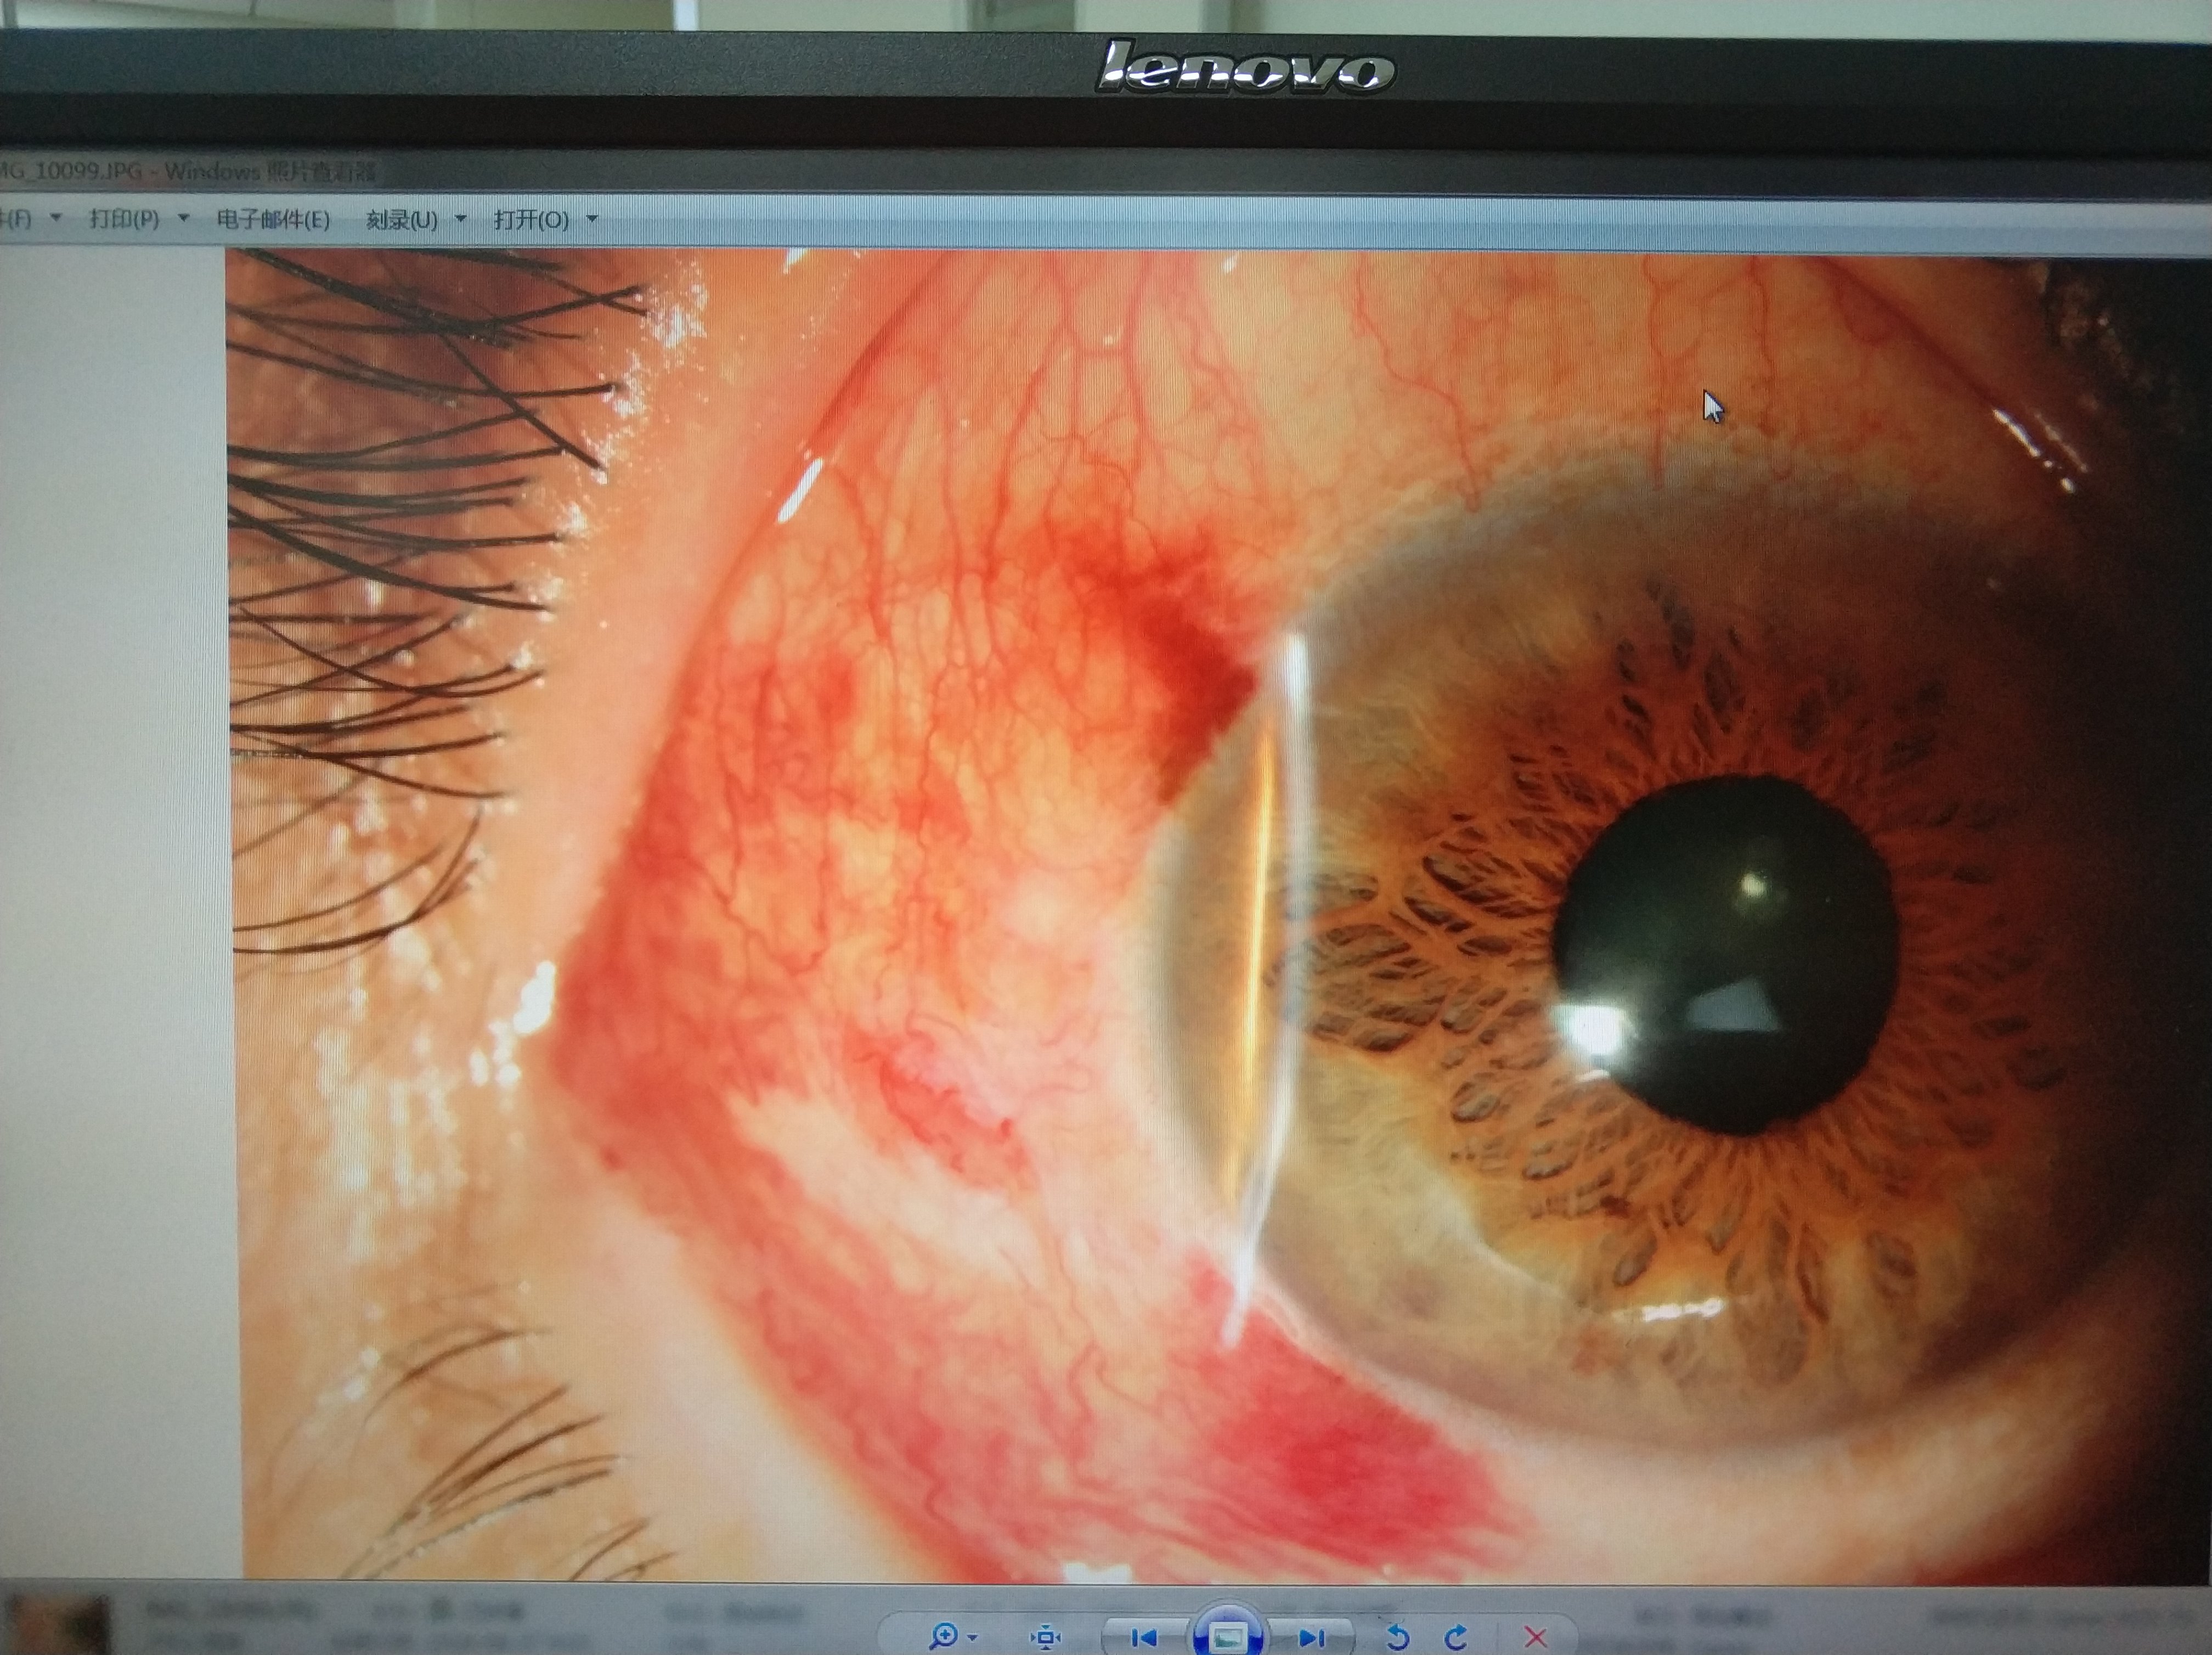 Pterygium Eye Disease